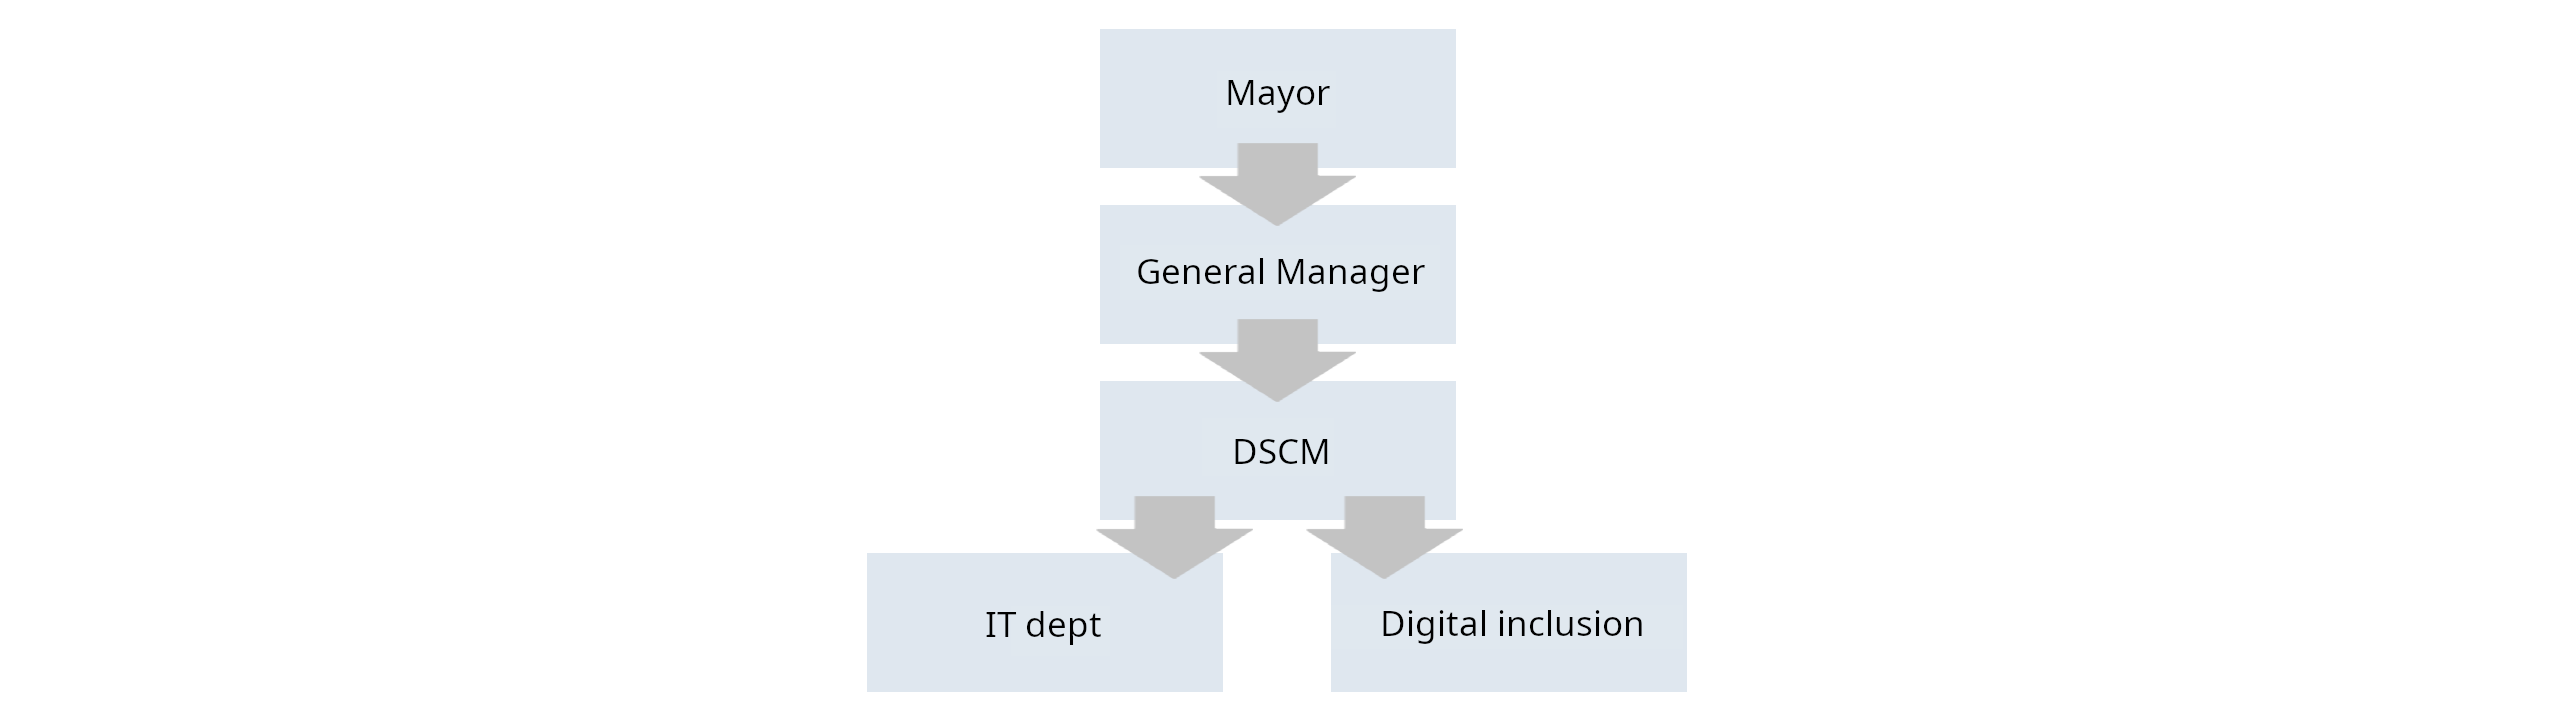 Simplified organization chart